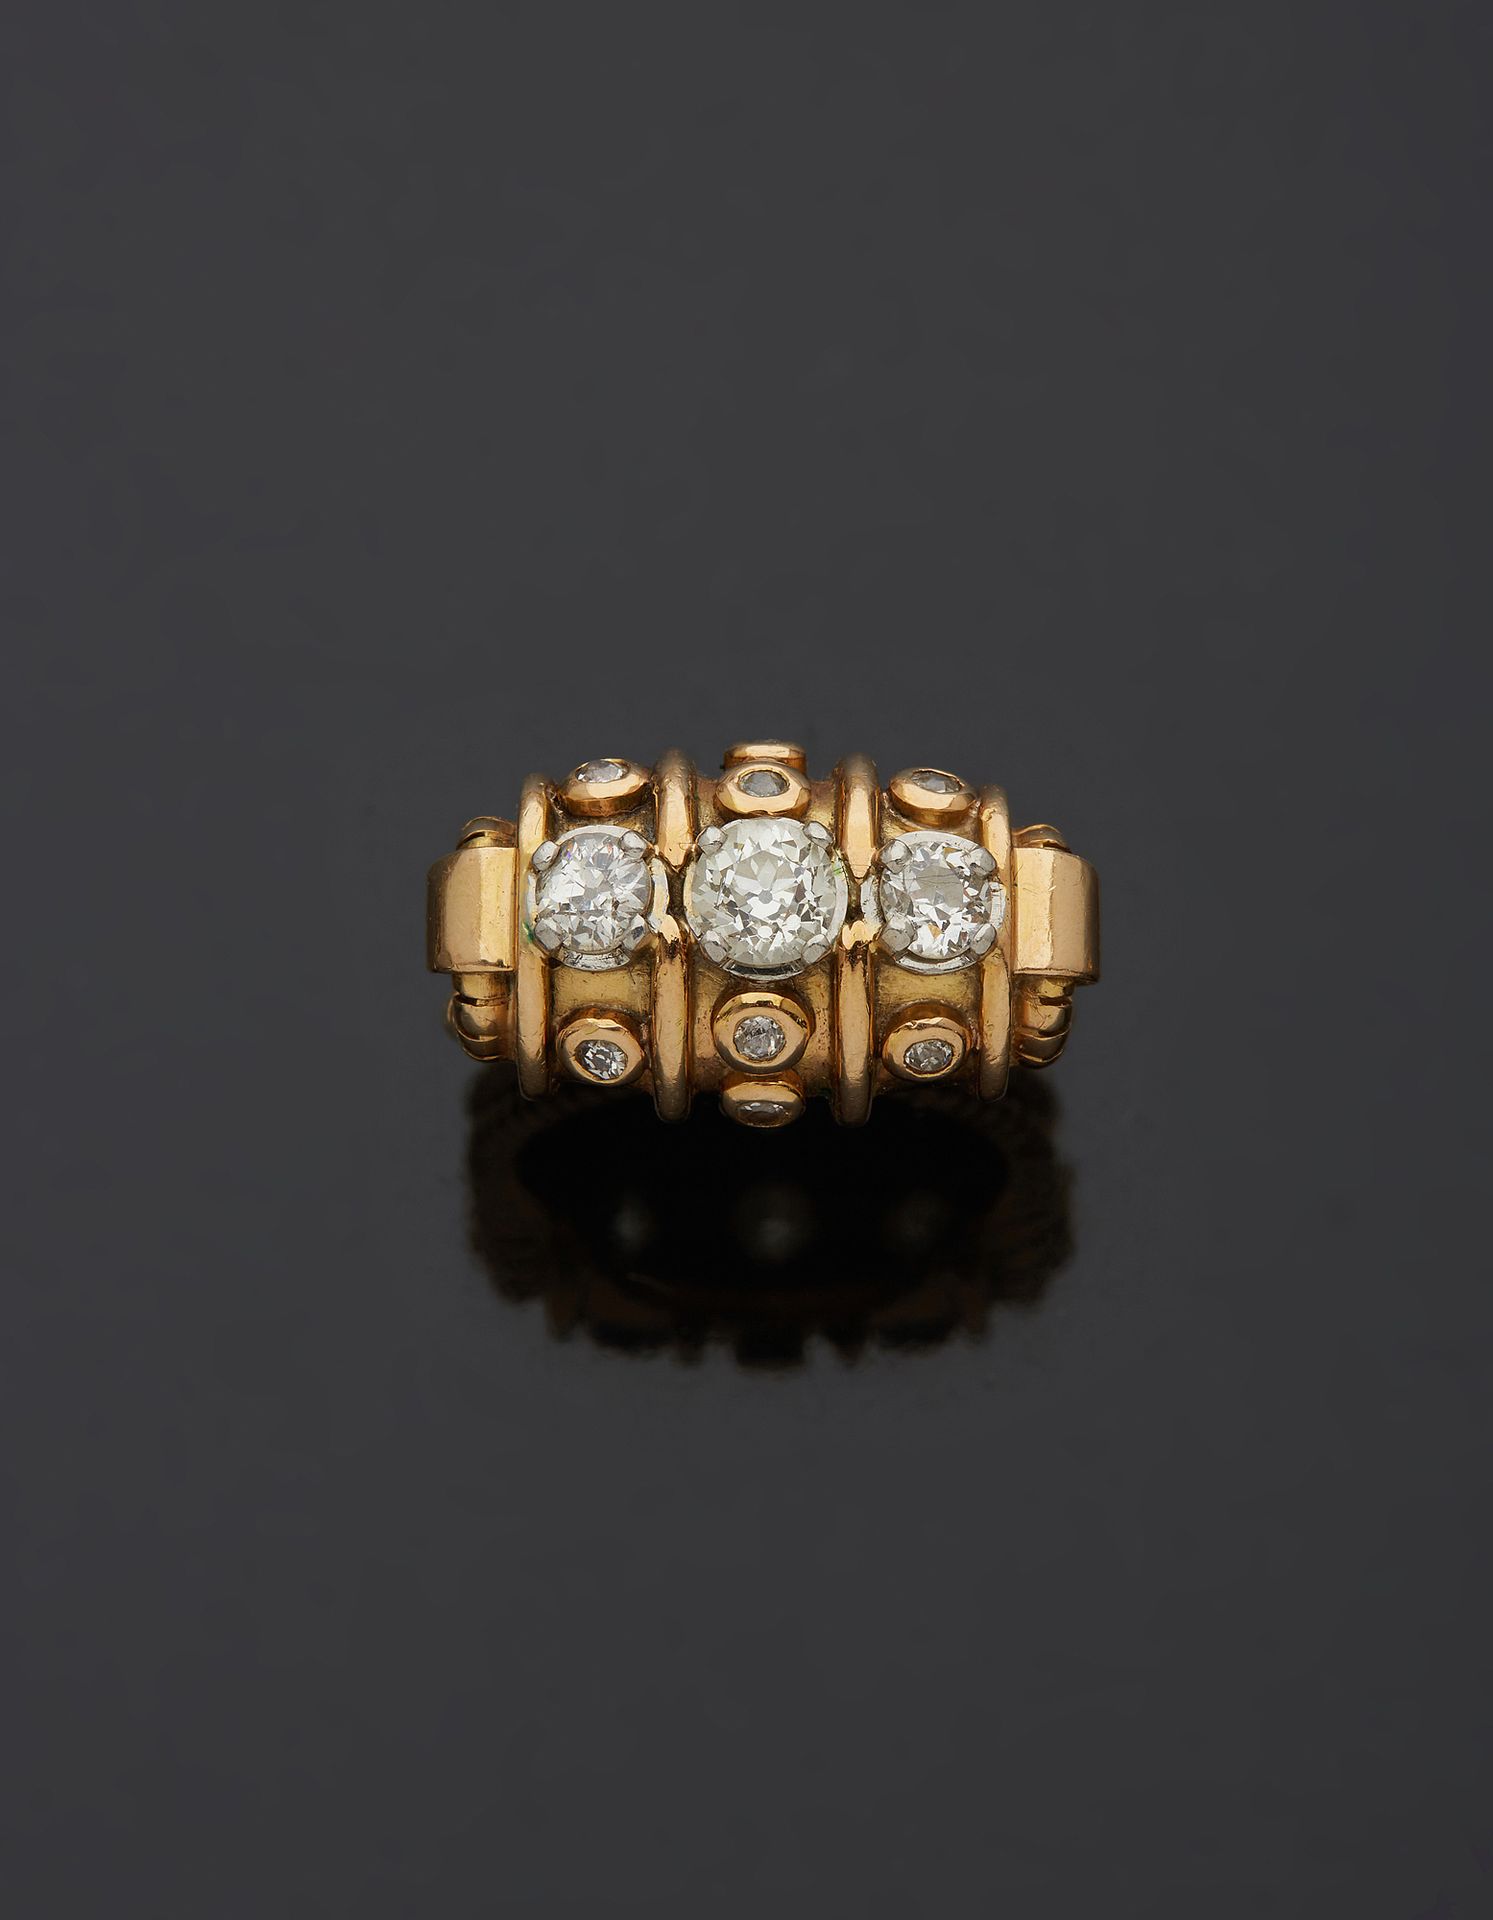 Null 一枚18K黄金750‰和铂金850‰的卷轴戒指，镶嵌着老式切割钻石。

手指尺寸51 毛重12.30克